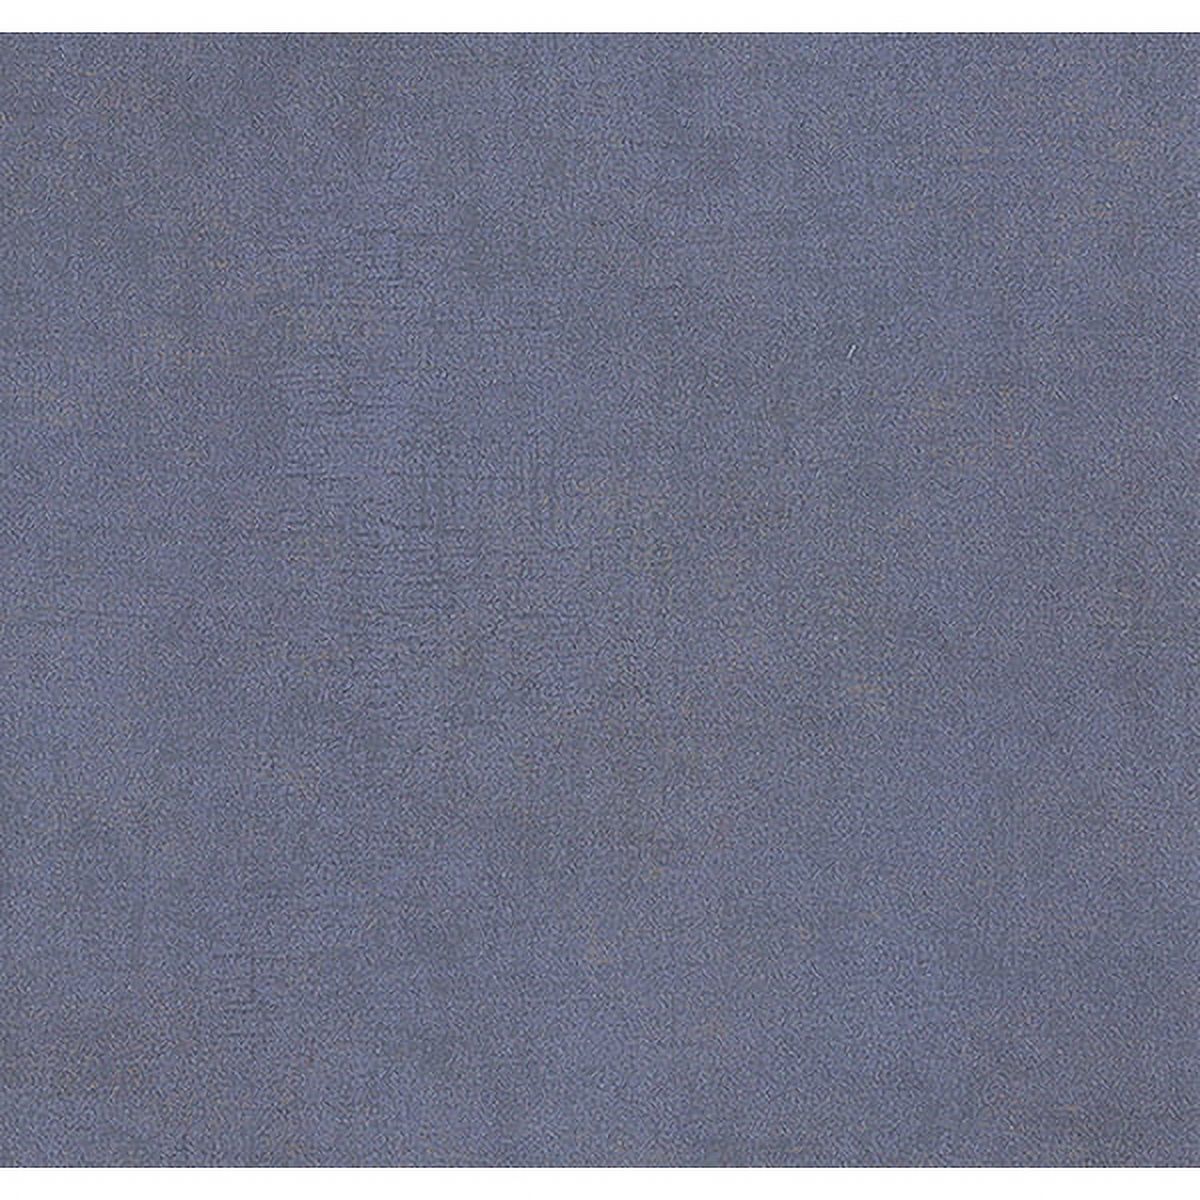 Brewster Madeleine Blue Bordeaux Texture Wallpaper - image 1 of 4